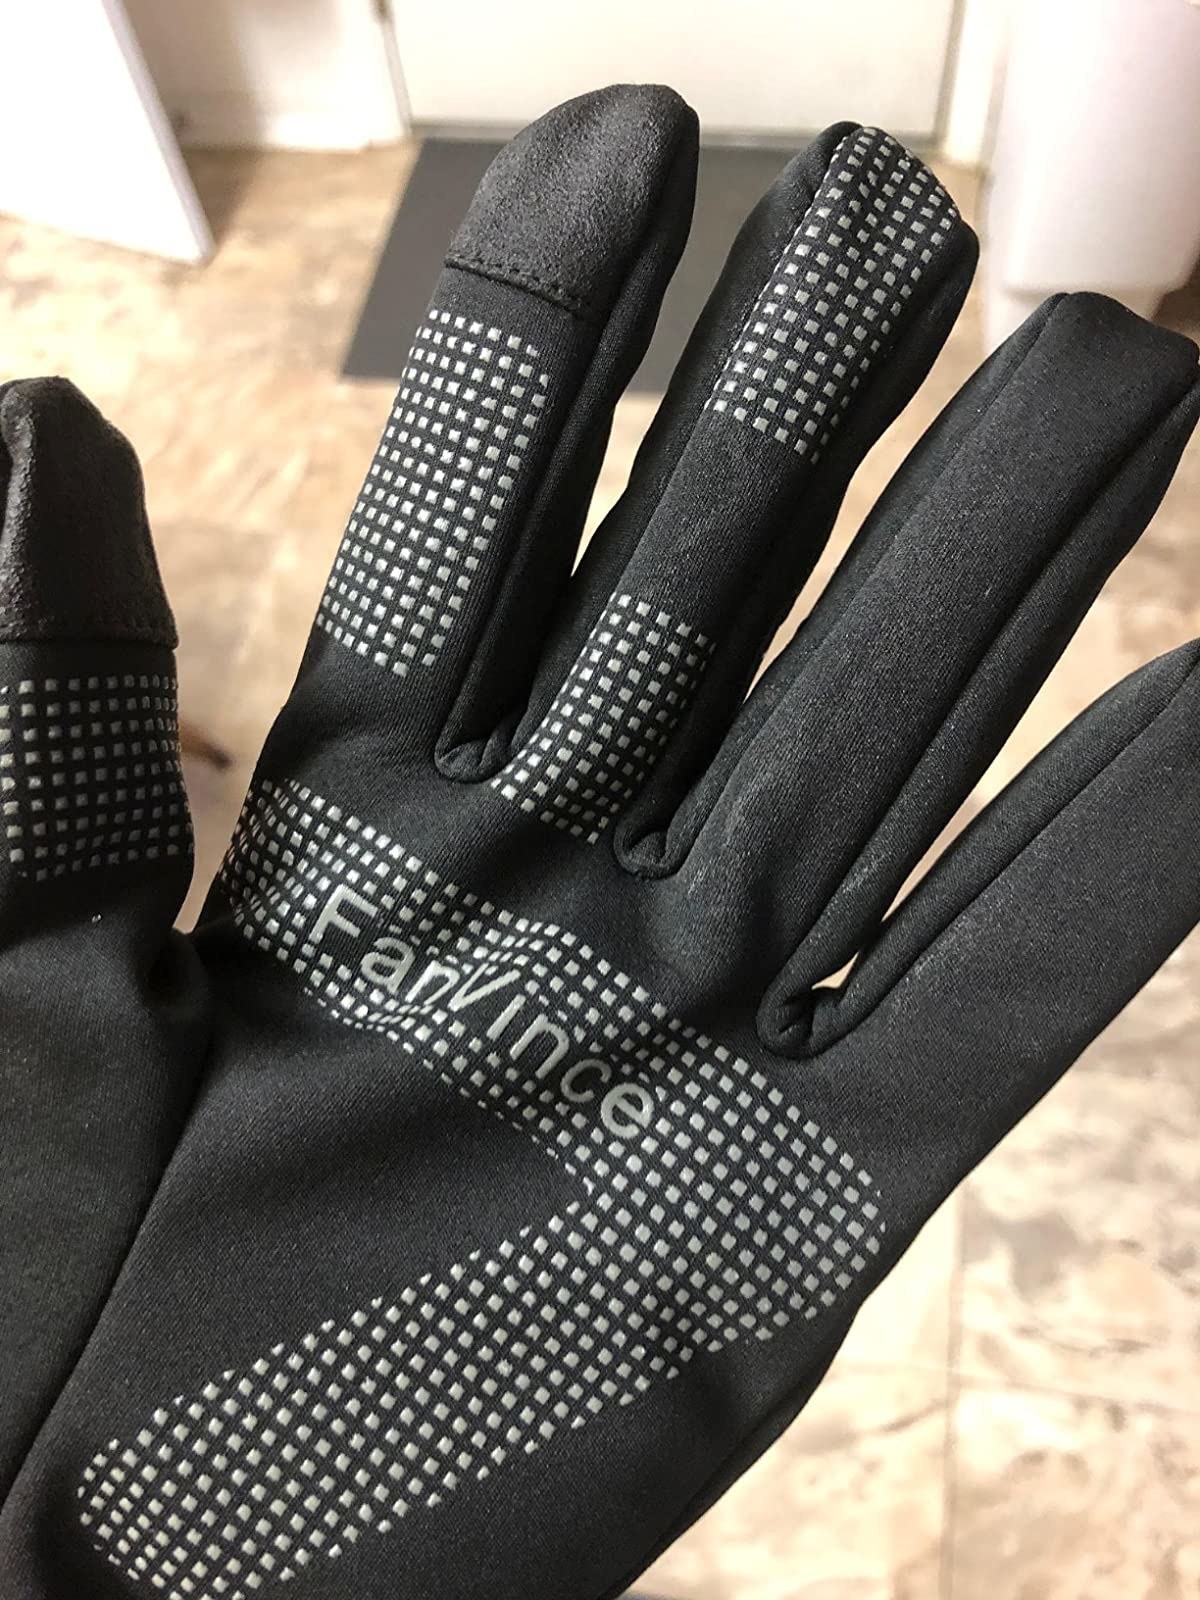 Reviewer wearing black glove